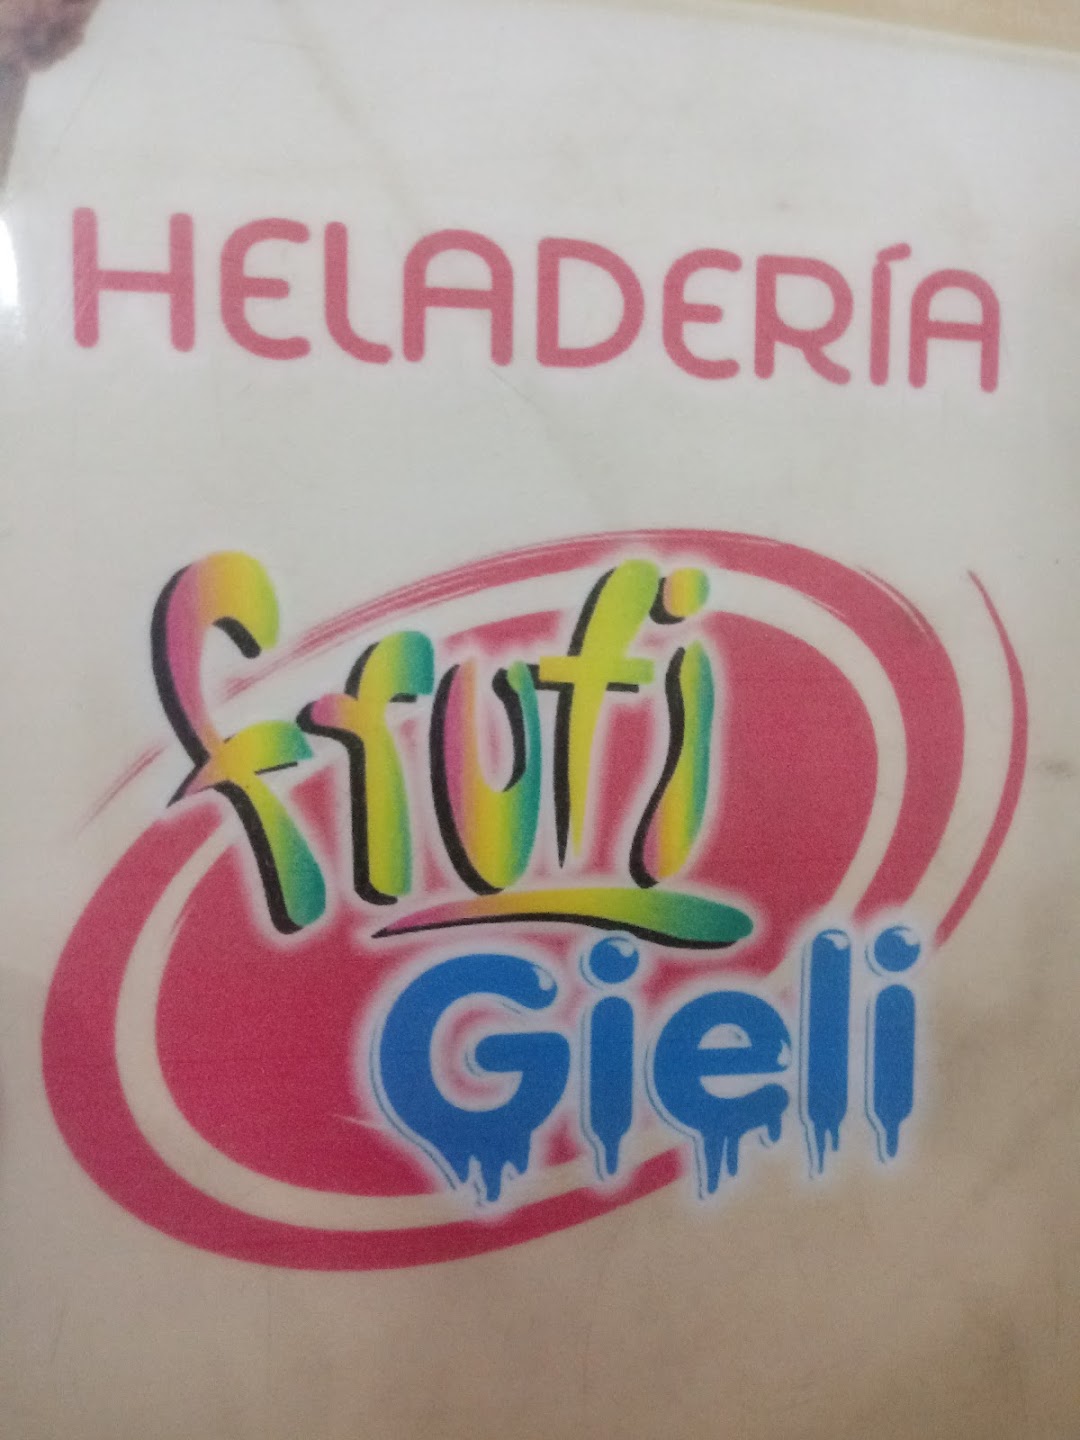 Heladeria Fruti Gieli